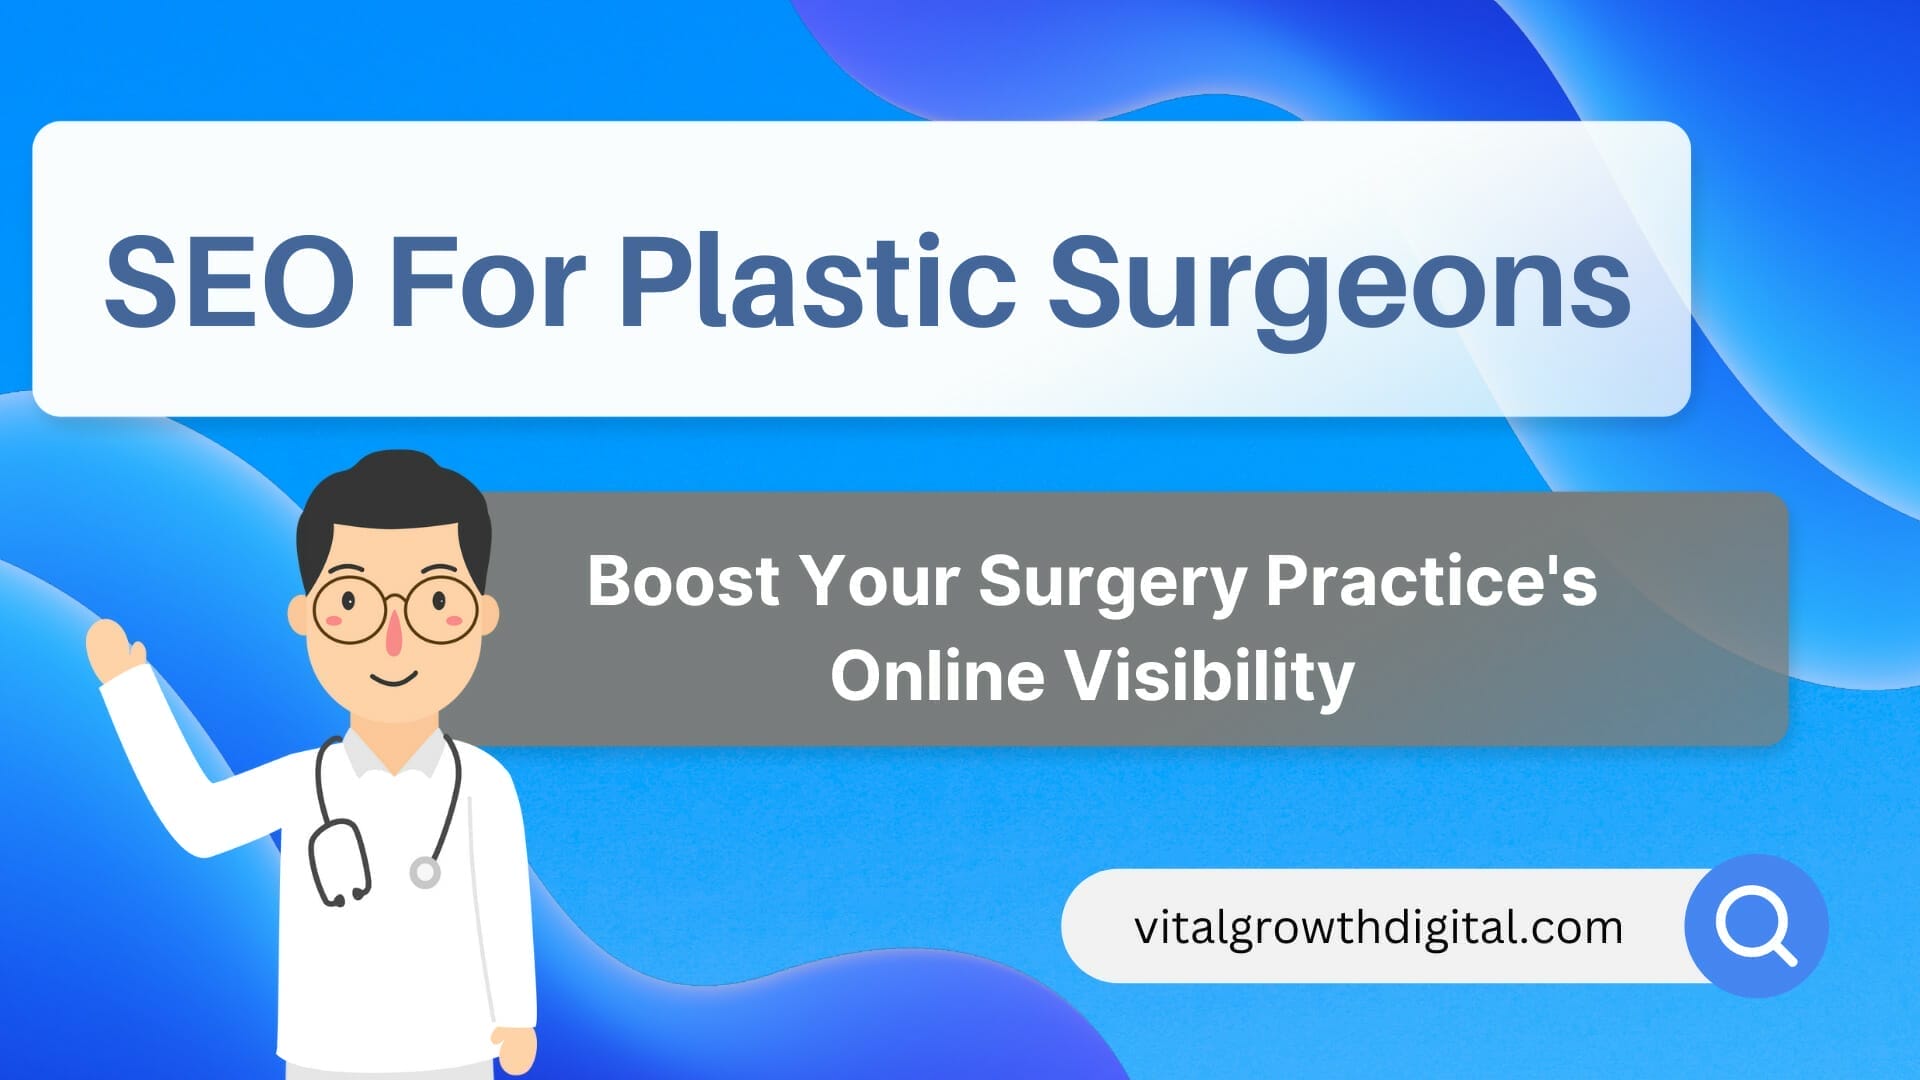 SEO for plastic surgeons blog post